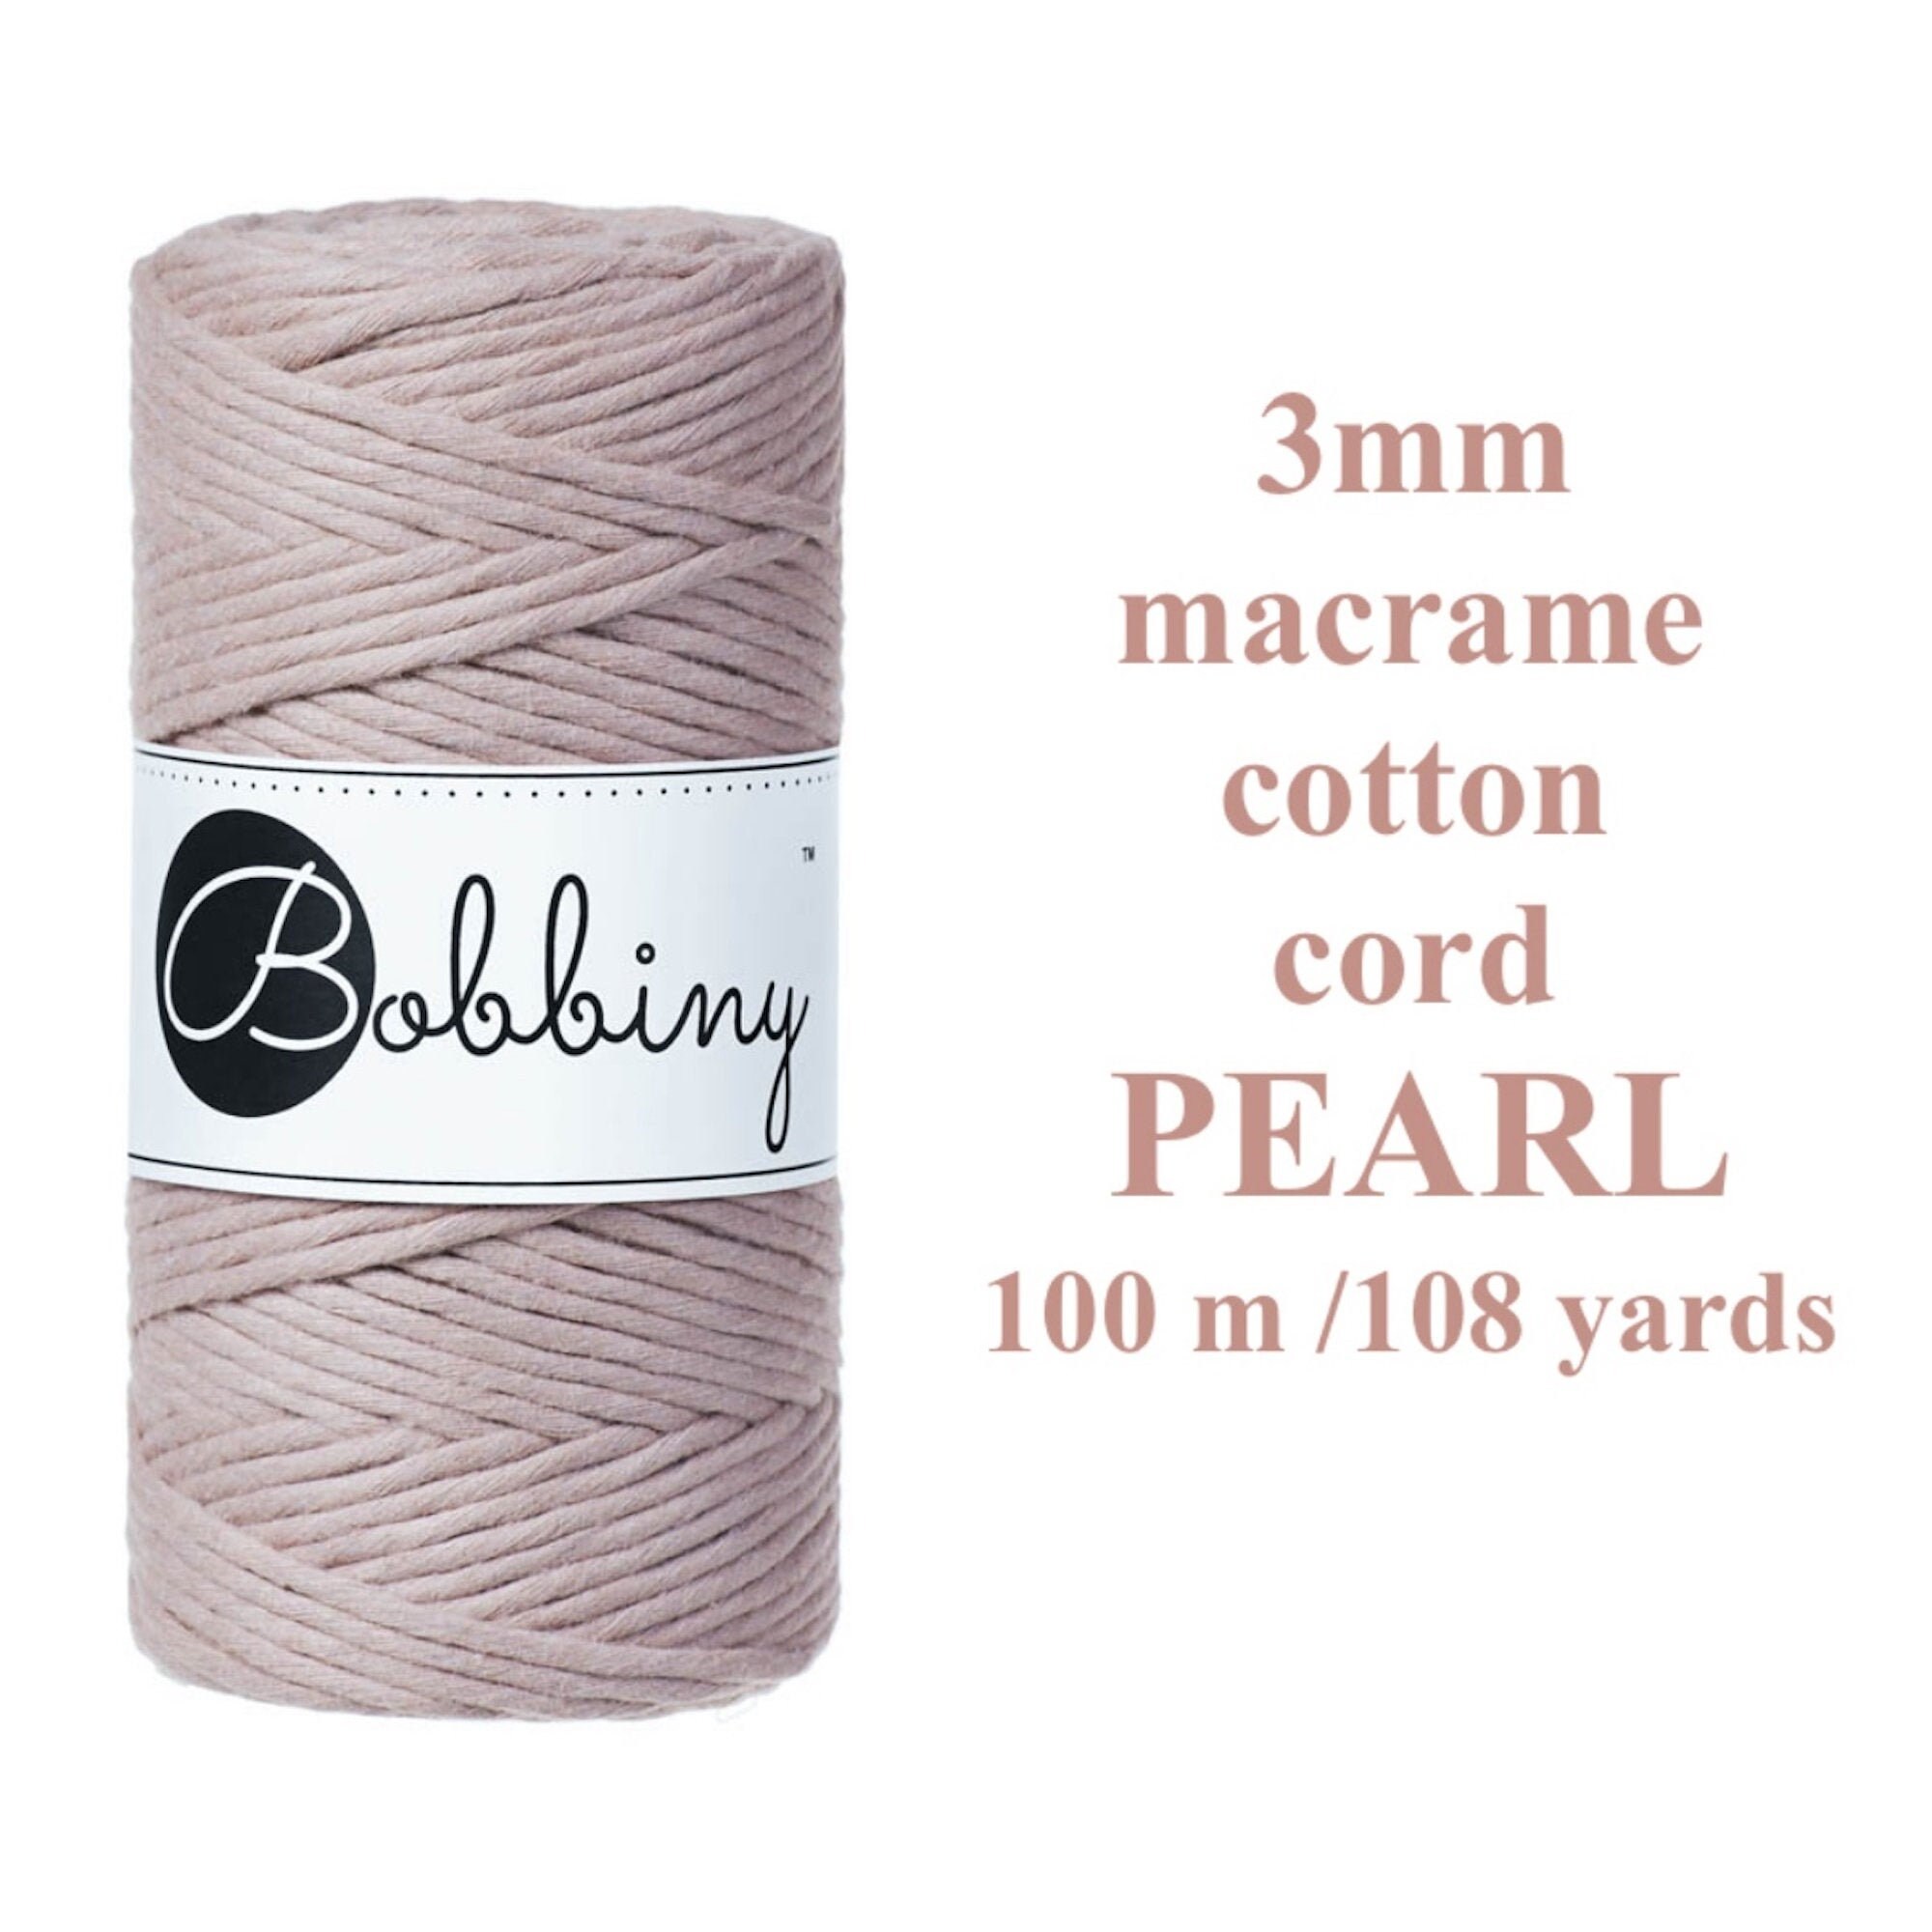 Pearl Macrame Cord 3mm 100m - BOBBINY